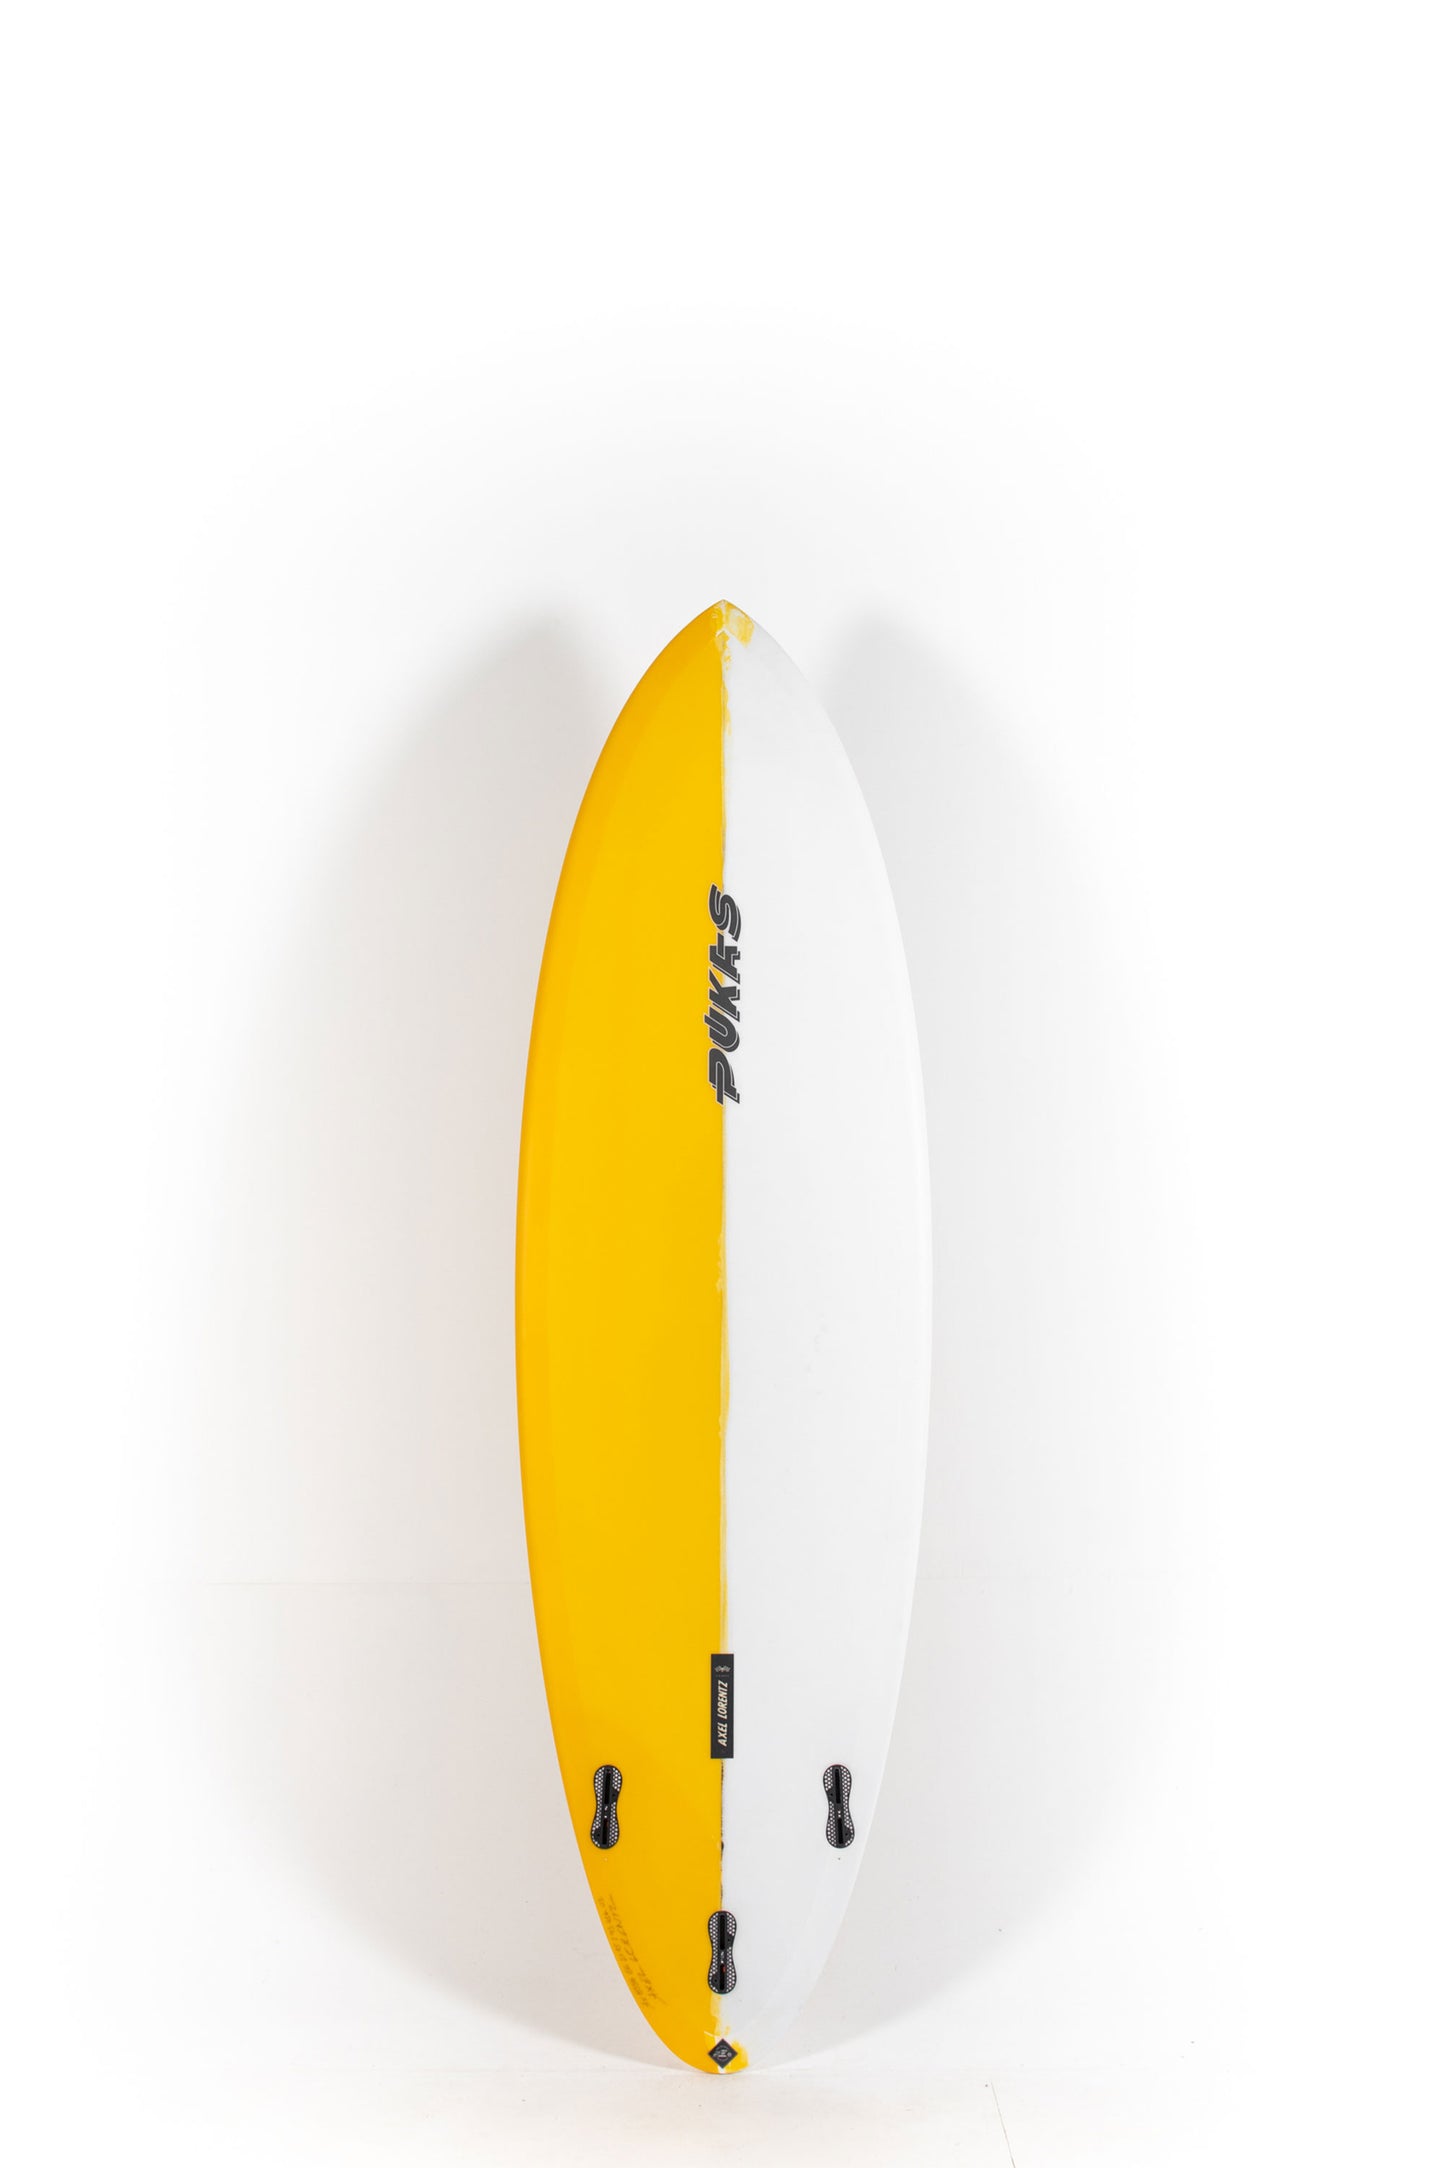 Pukas Surf Shop - Pukas Surfboard - ORIGINAL 69 by Axel Lorentz - 6’6” x 21,75 x 2,93 - 45L - AX08556